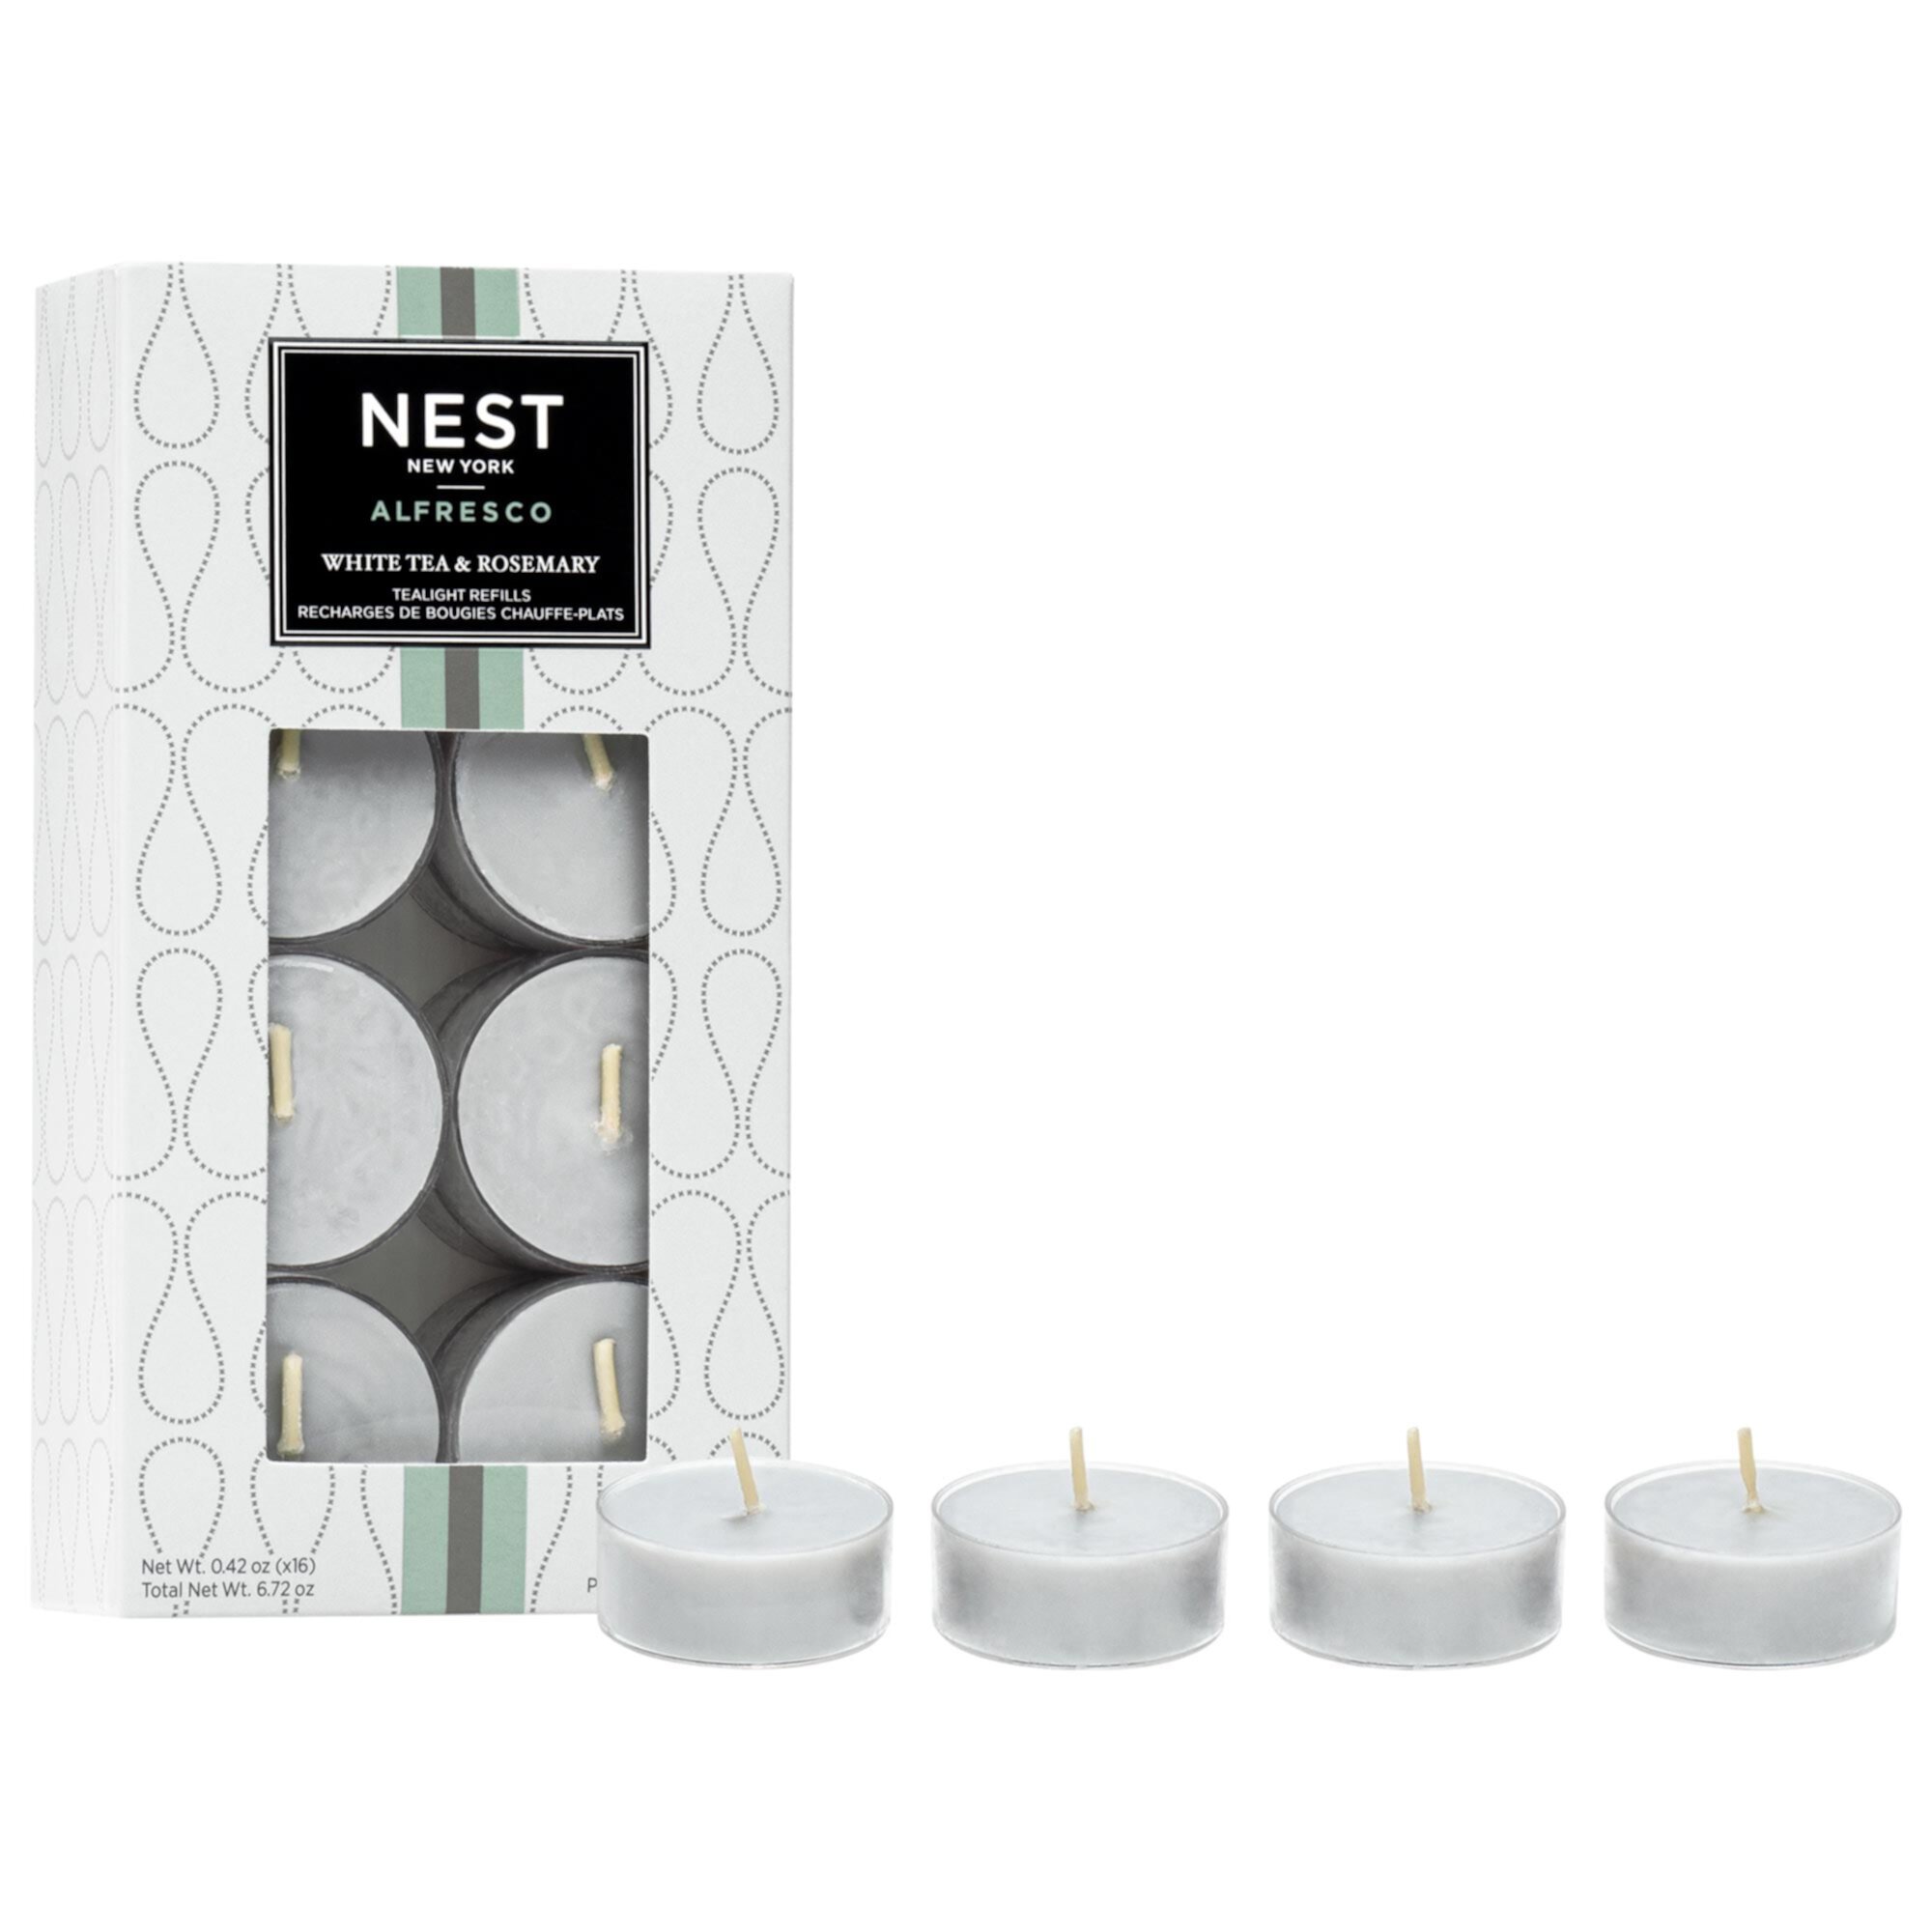 White Tea & Rosemary Alfresco Candle Nest New York